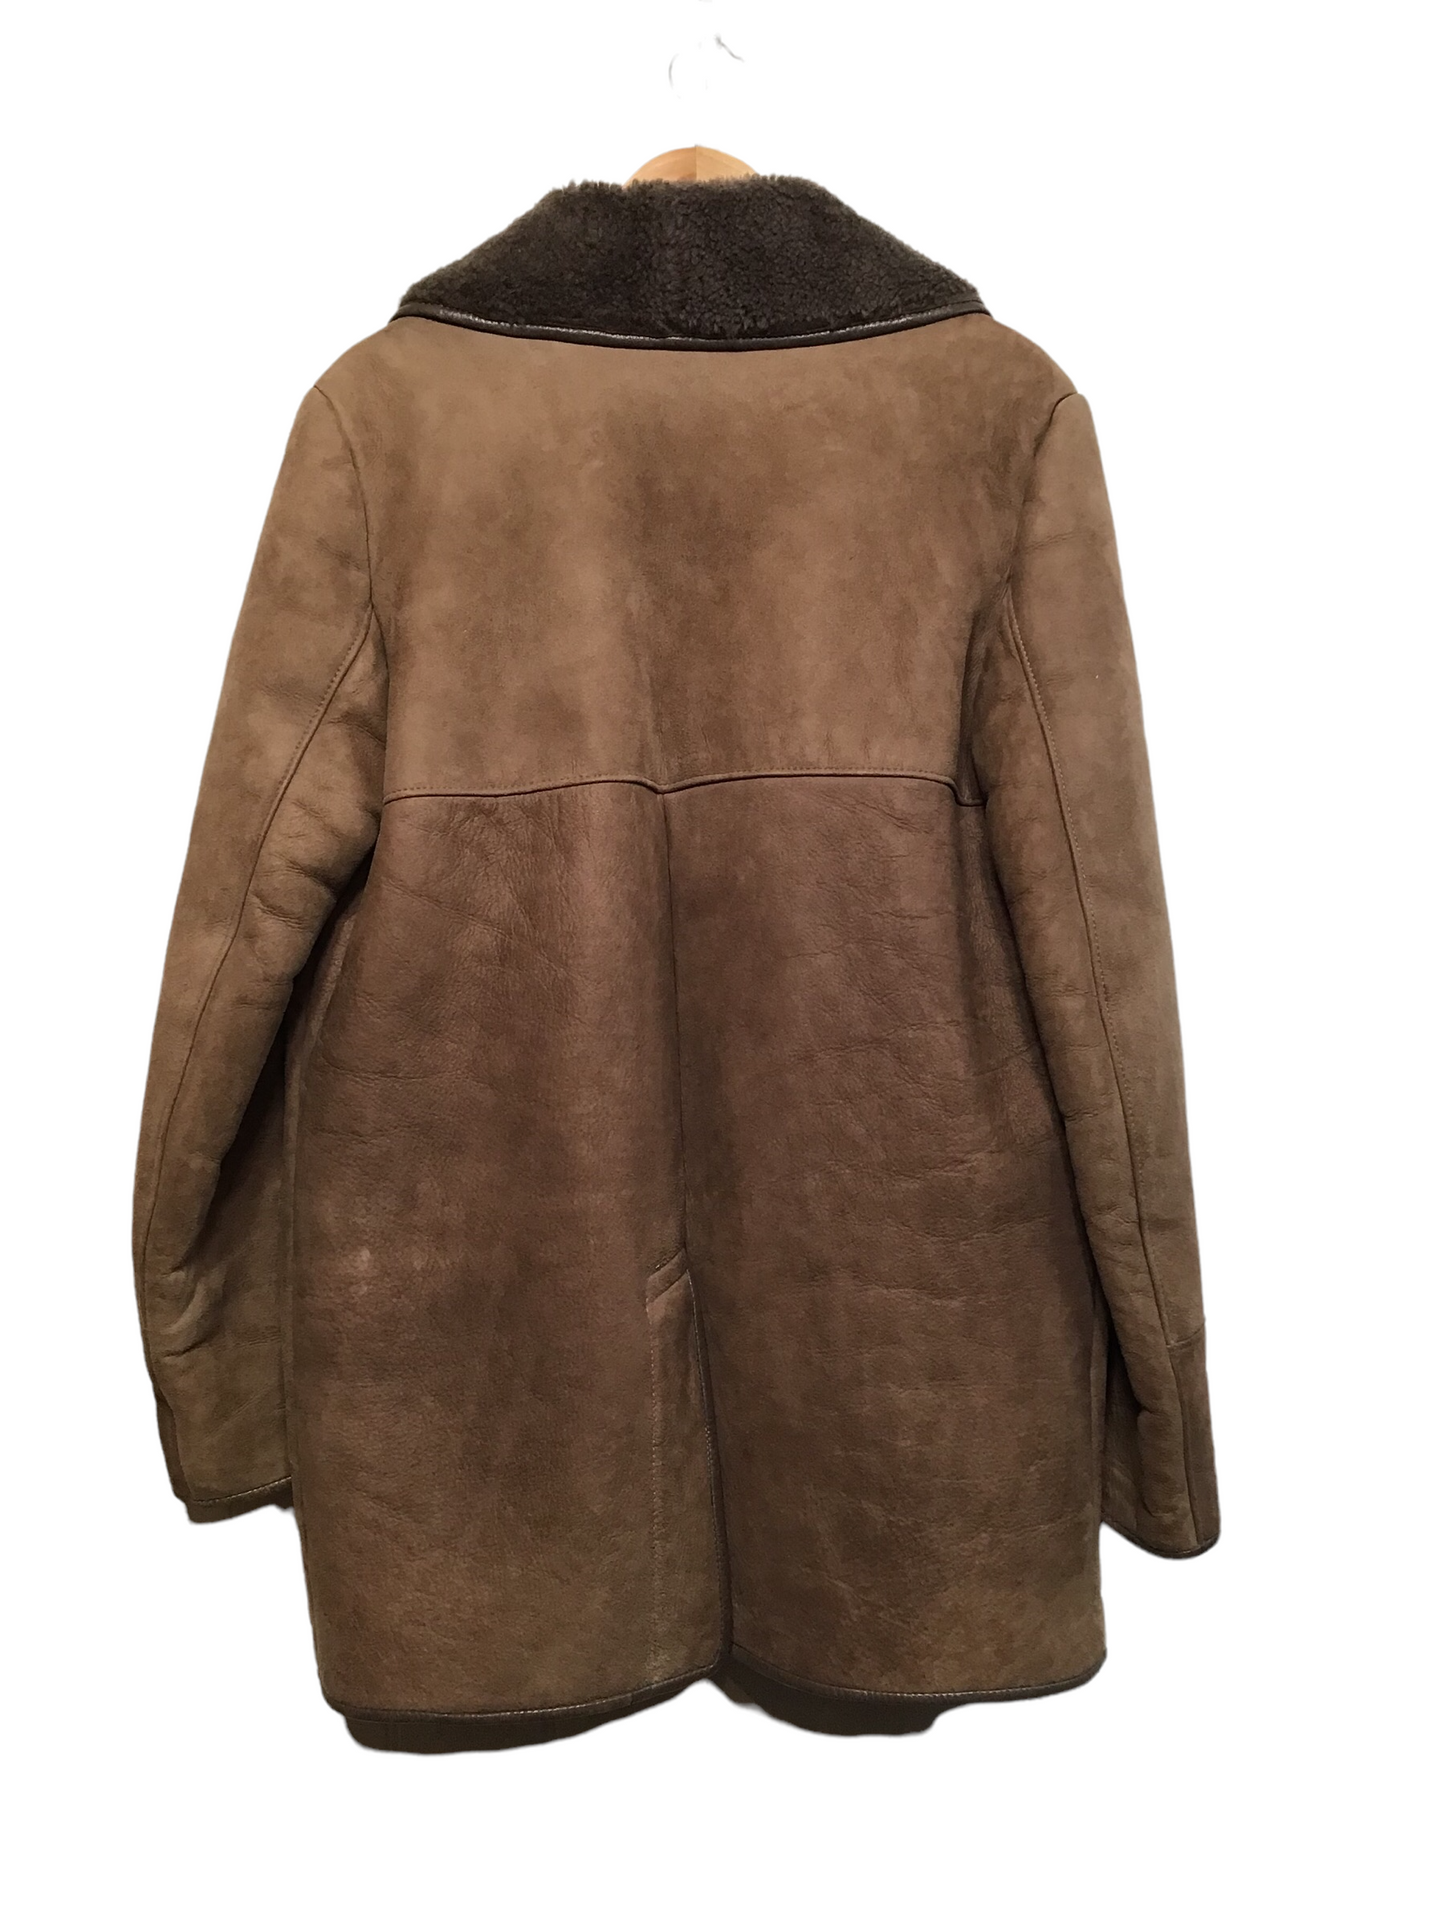 Brown Shearling Coat (Size L)